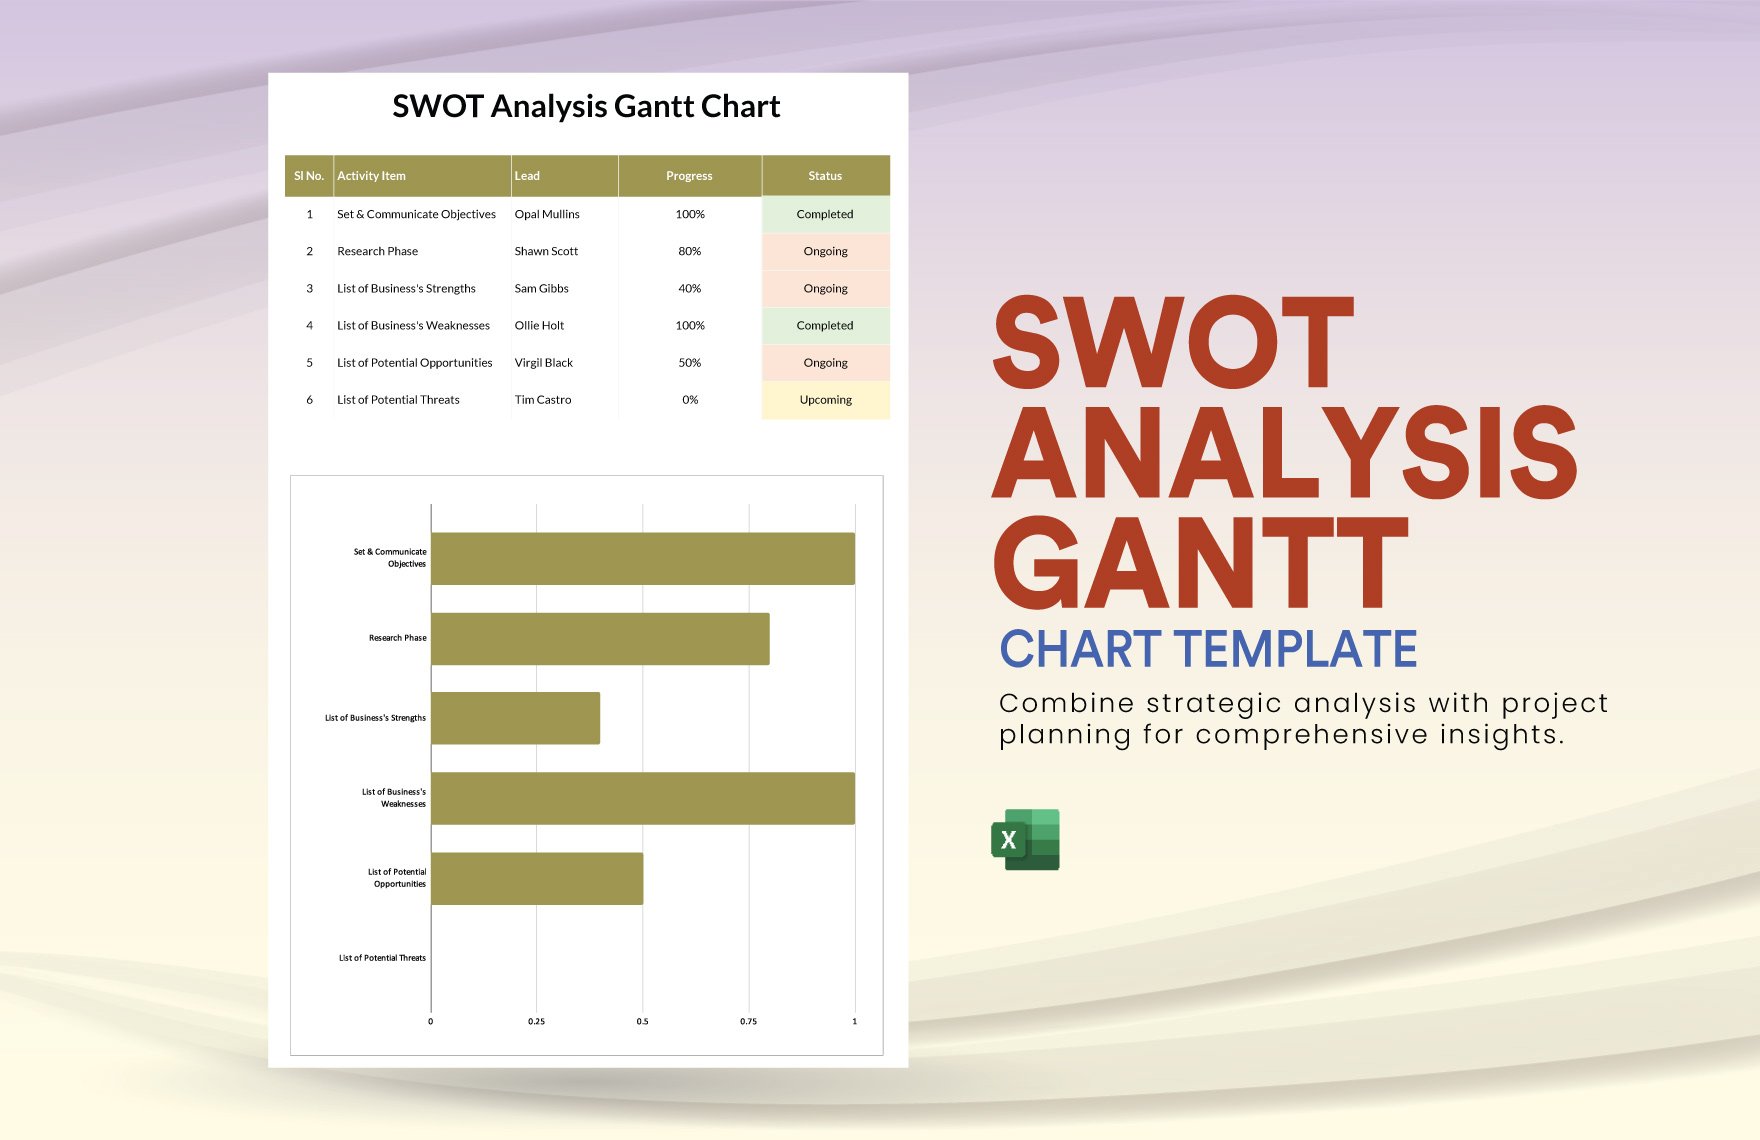 SWOT Analysis Gantt Chart Template in Excel